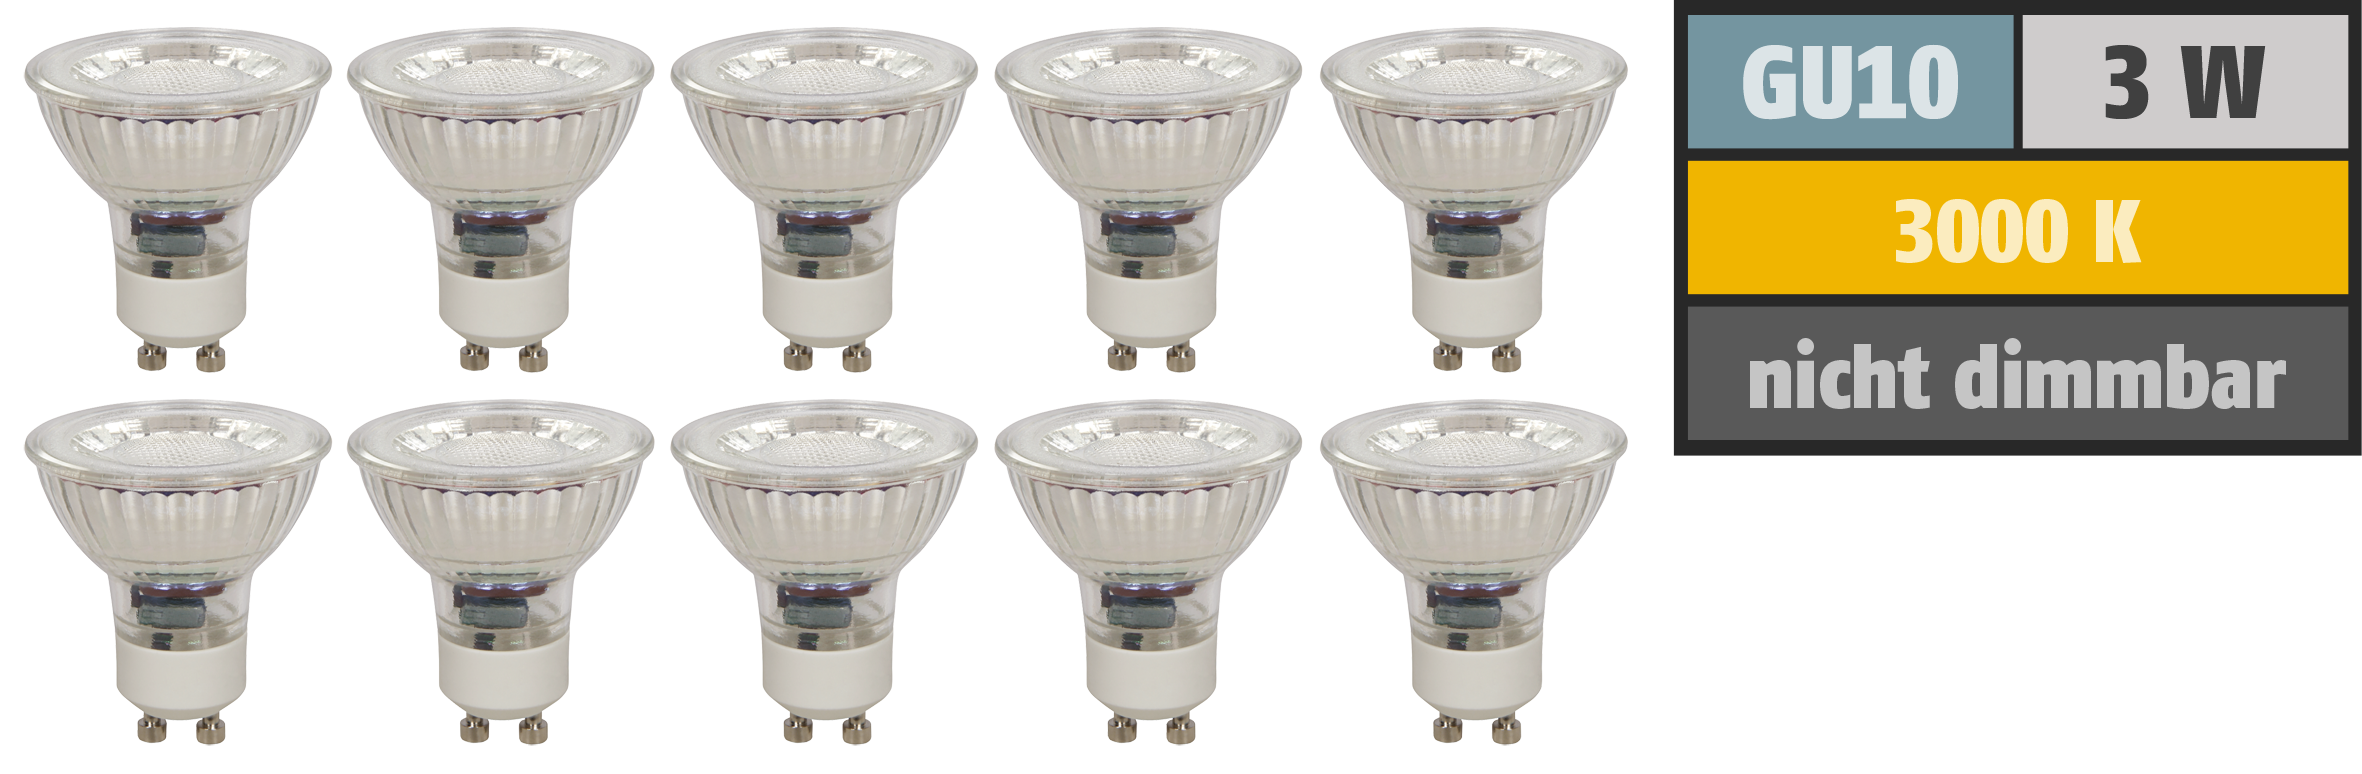 LED-Strahler McShine ''MCOB'' GU10, 3W, 250 lm, warmweiß, 10er-Pack